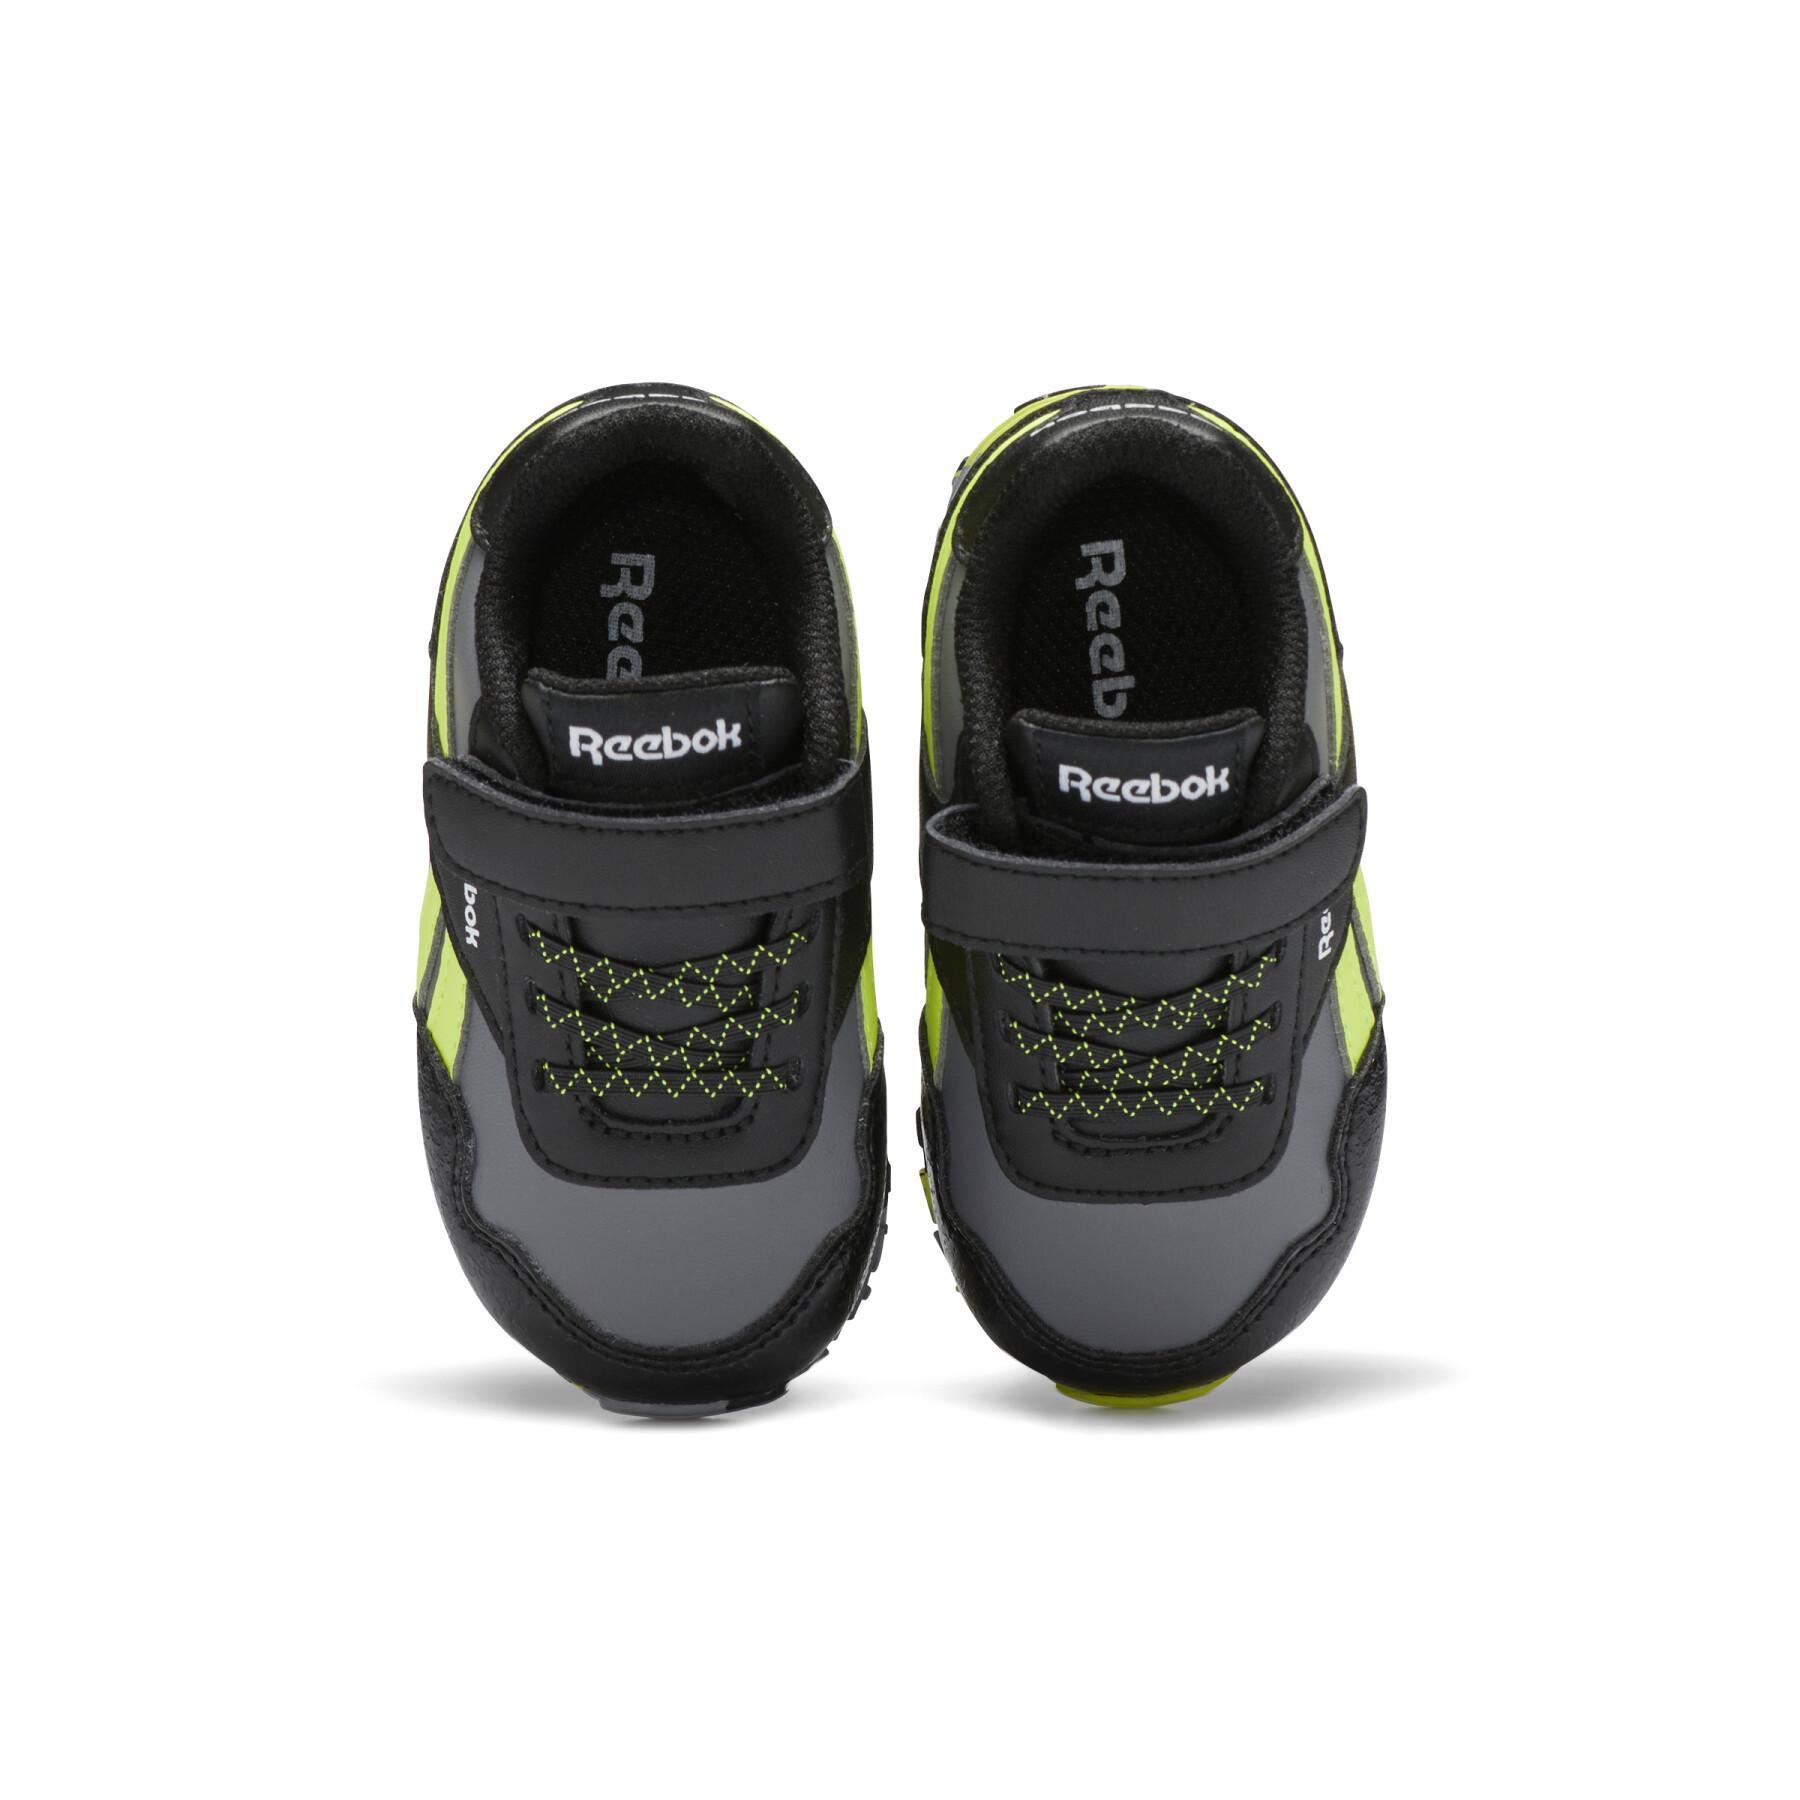 Children's sneakers Reebok Royal Classic Jogger 3 1V